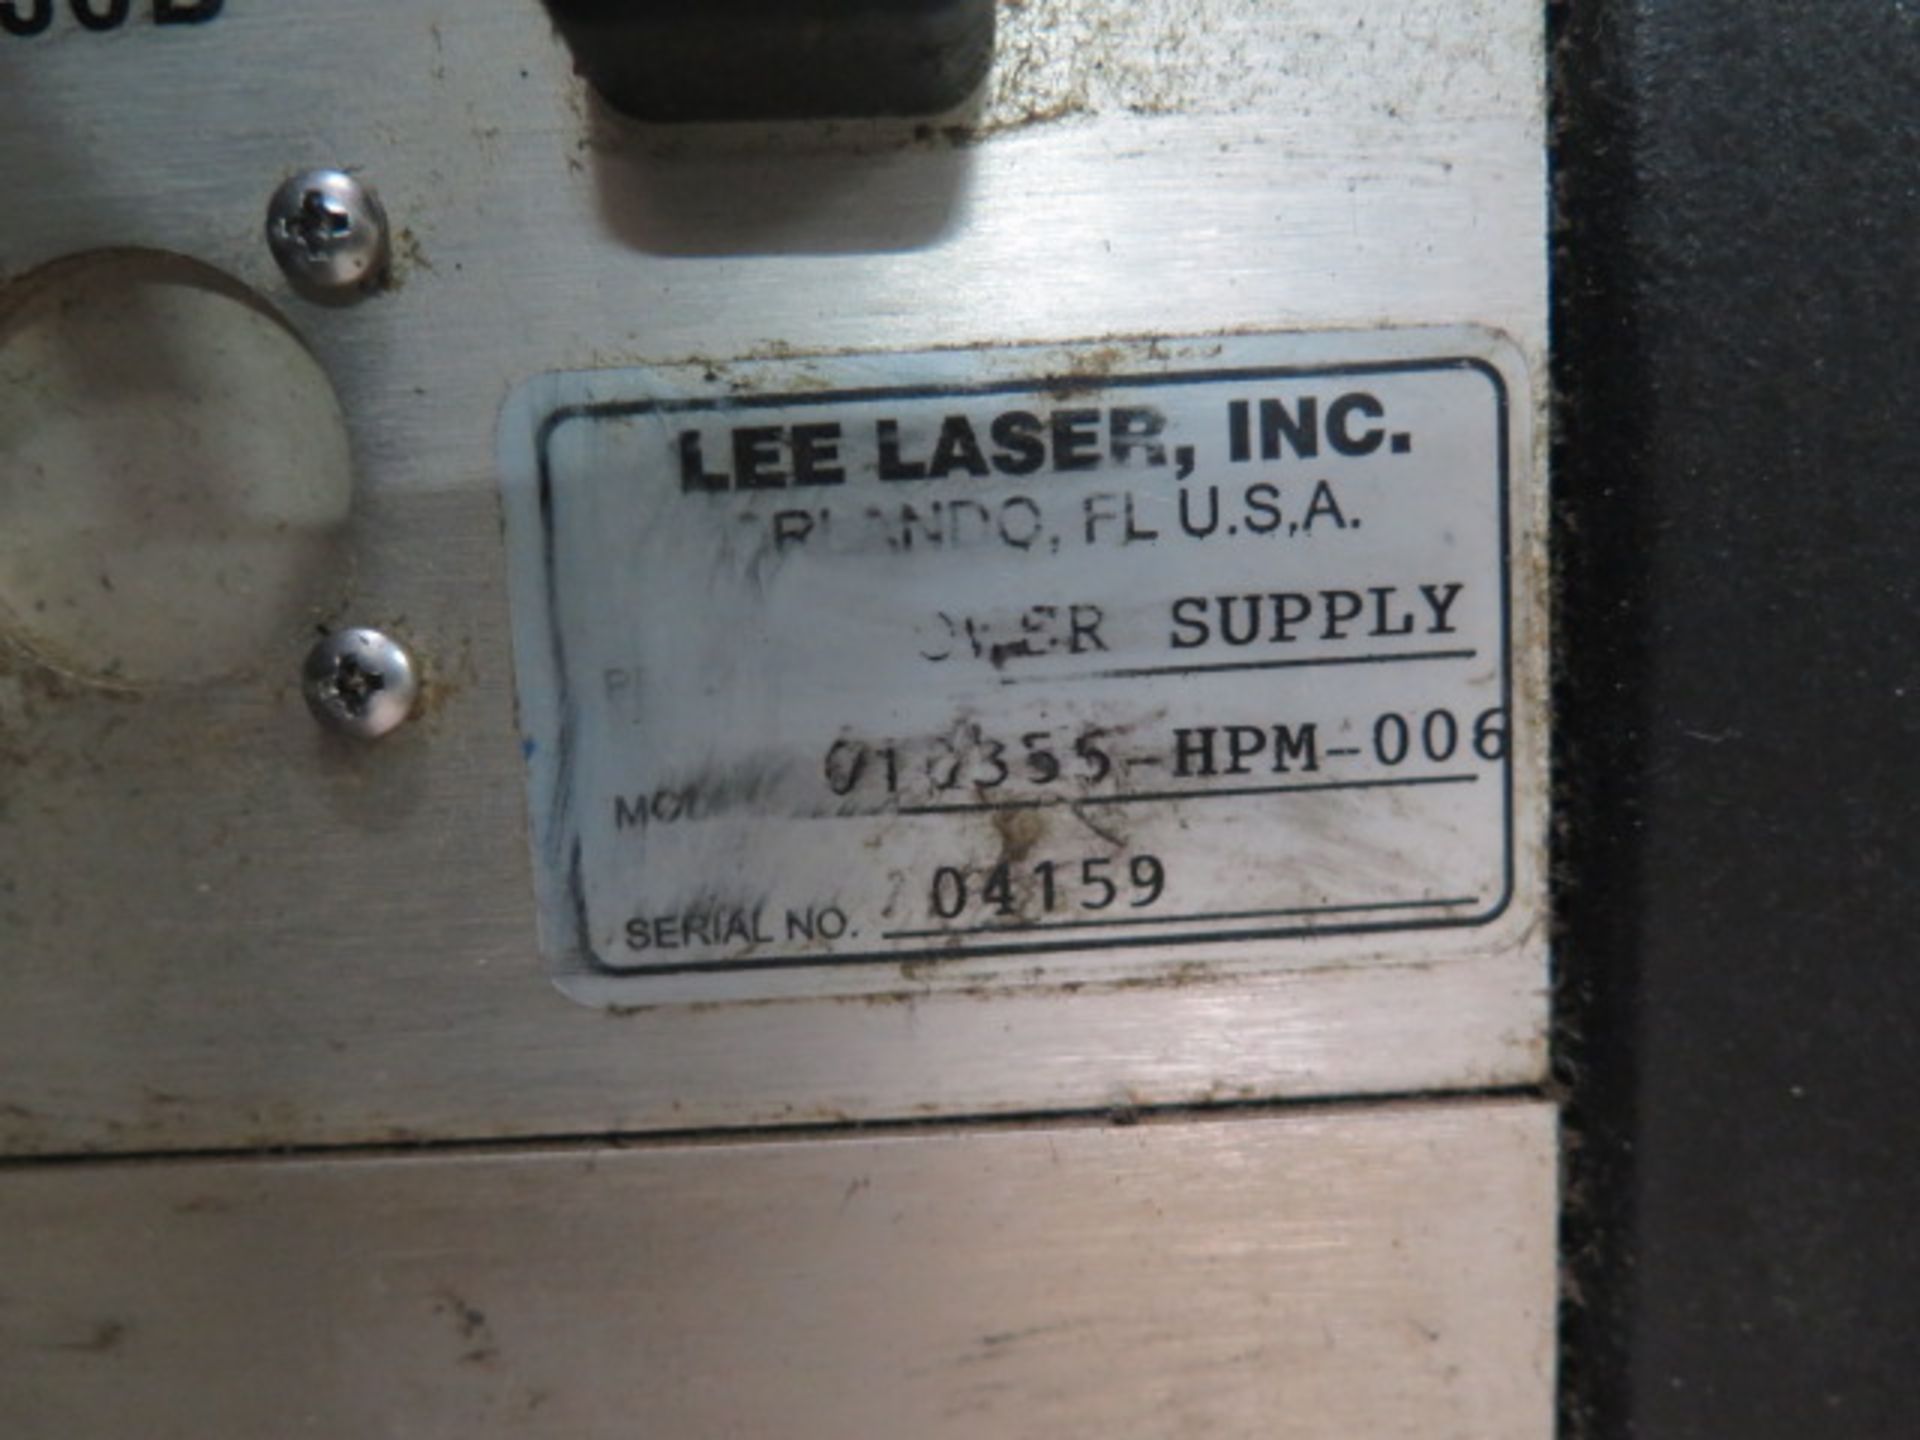 Jimani Inc / Lee Laser 100 Watt Basic Nd:YAG Laser Marking System s/n 2004013, SOLD AS IS - Image 12 of 12